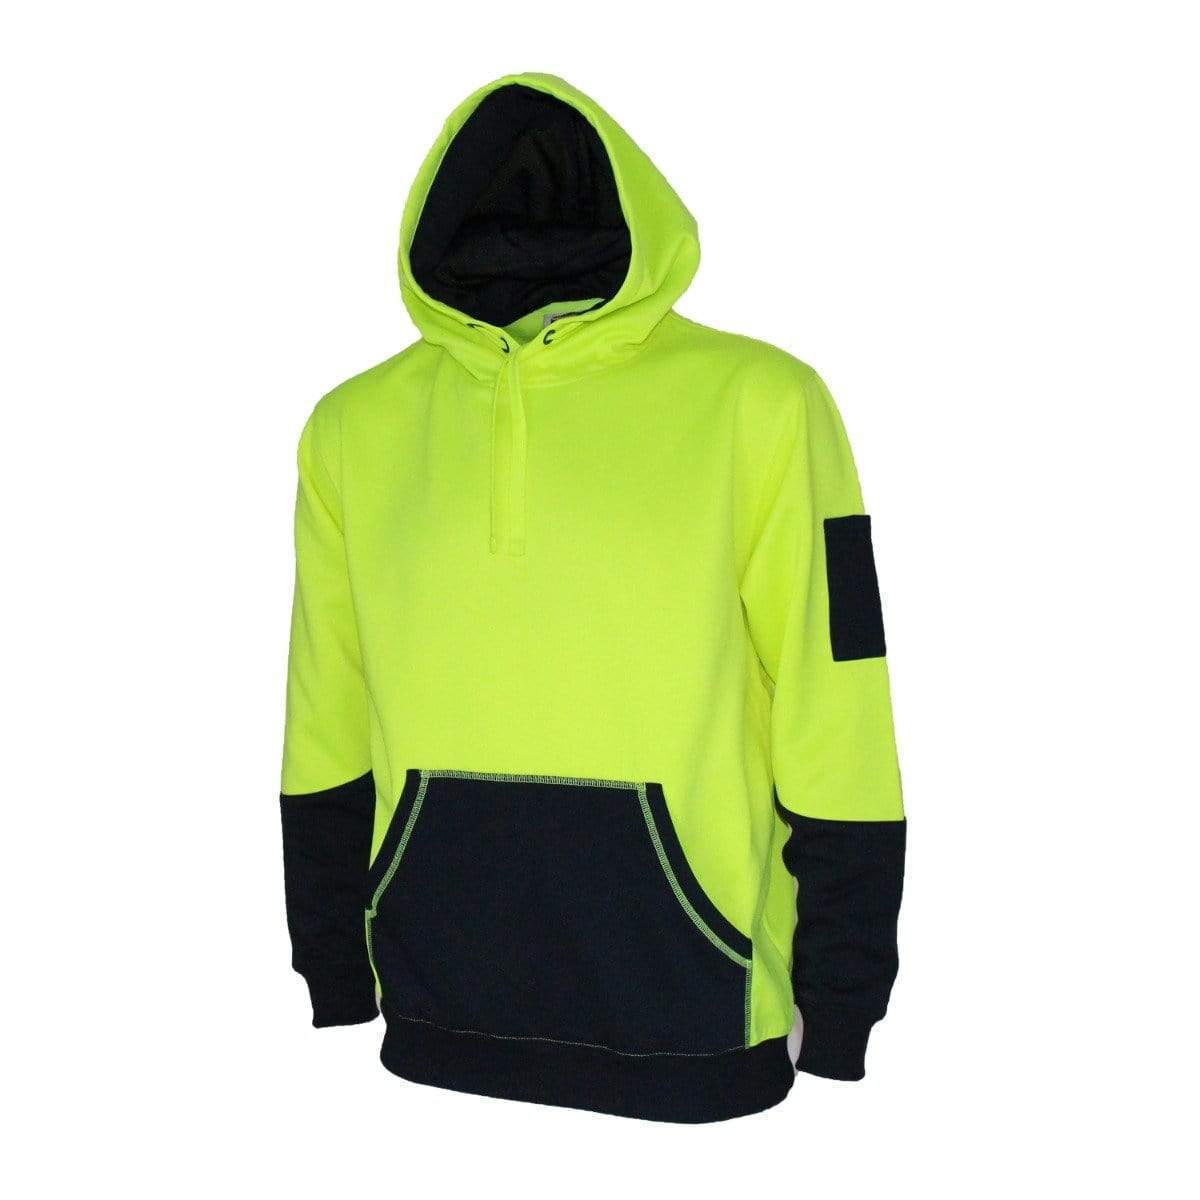 Dnc Workwear Hi-vis 2 Tone Super Fleecy Hoodie - 3721 Work Wear DNC Workwear Yellow/Navy 6XL 